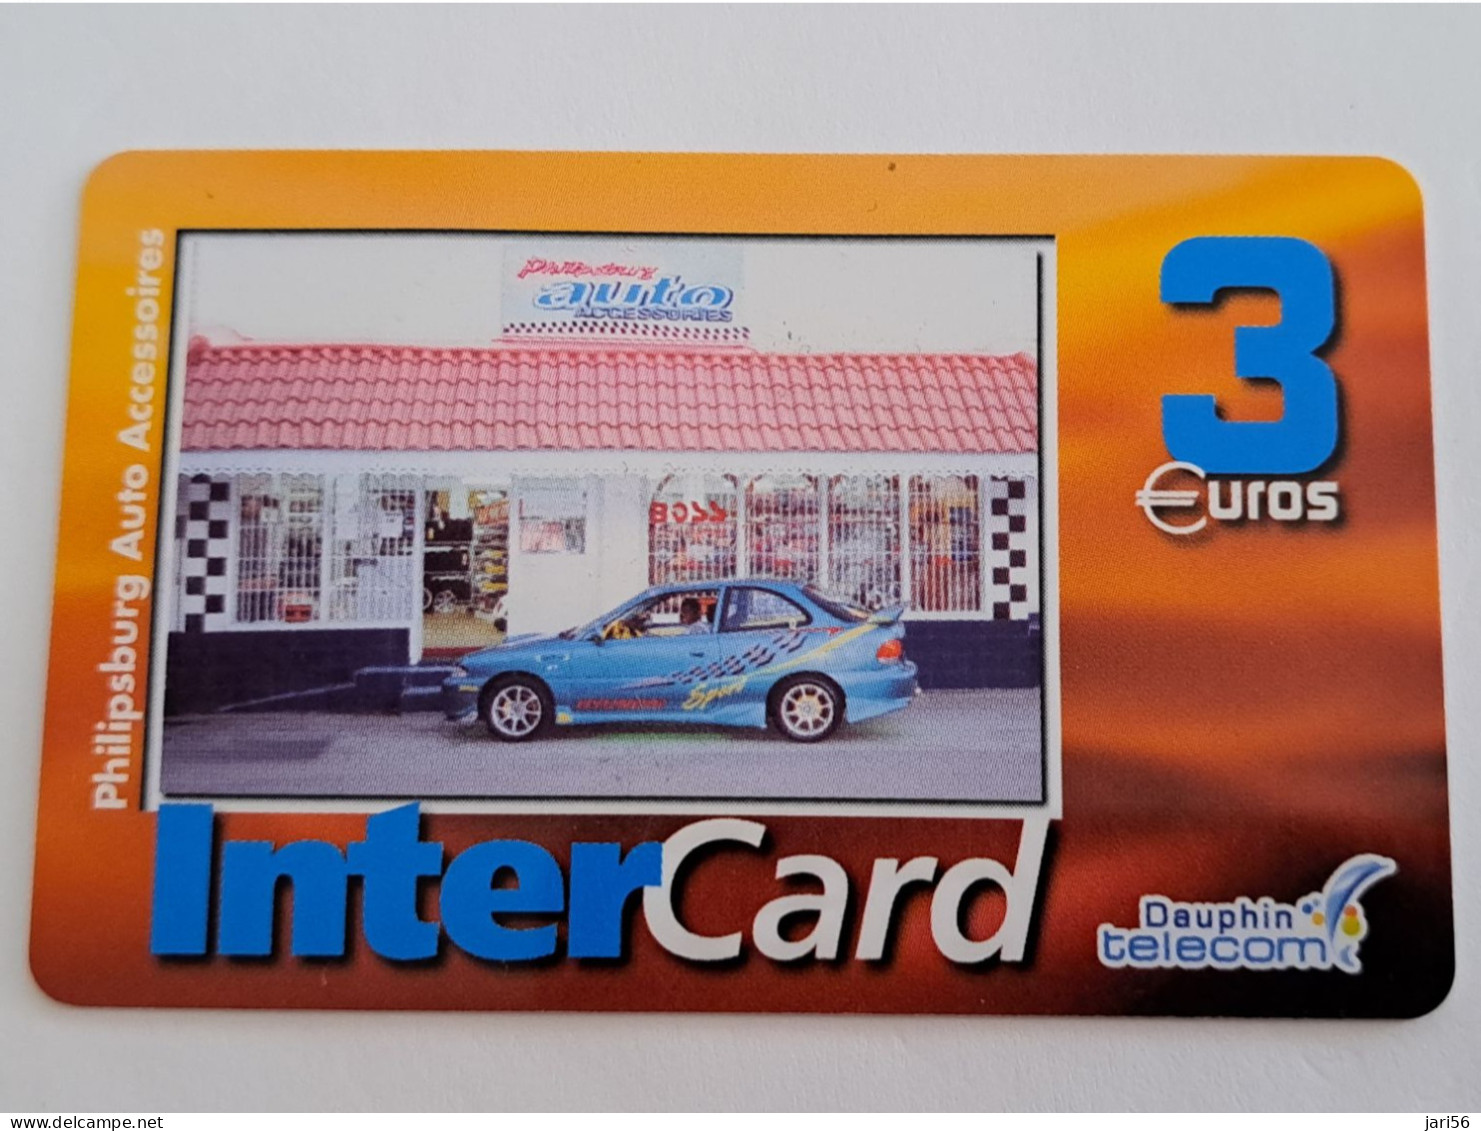 ST MARTIN / INTERCARD  3 EURO    PHILIPSBURG AUTO ACCESSOIRES          NO 146   Fine Used Card    ** 13717 ** - Antille (Francesi)